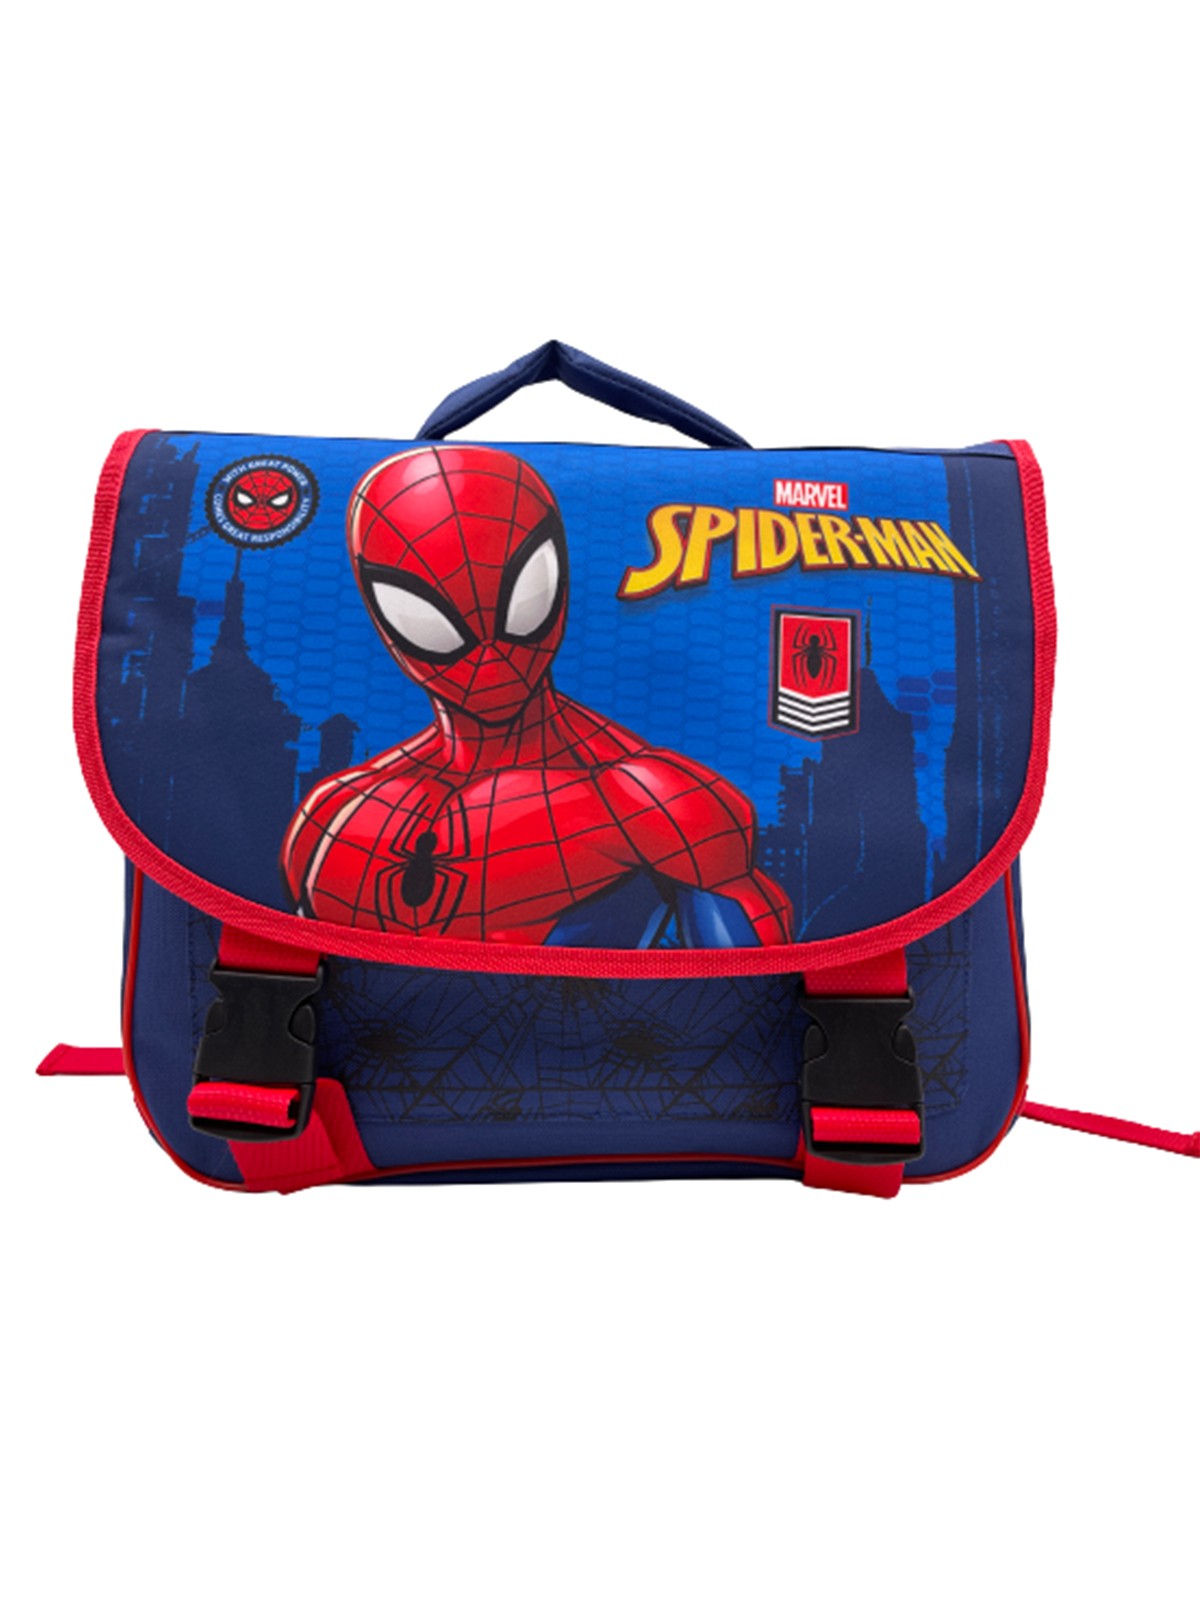 Spiderman School bag